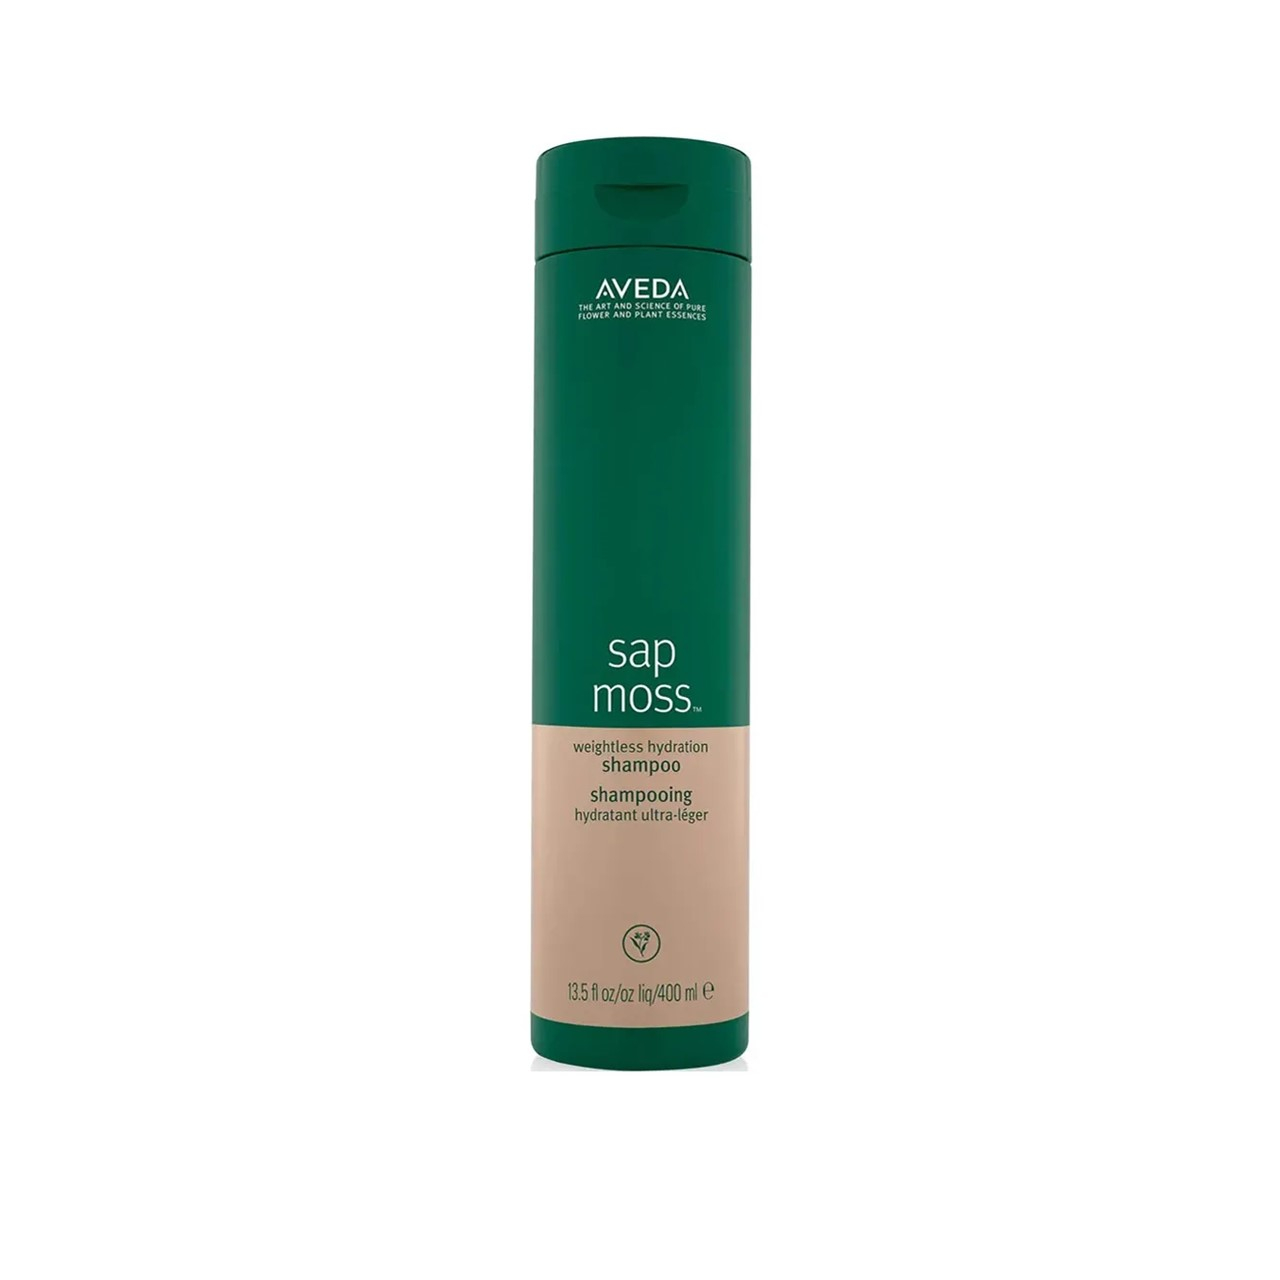 Aveda Sap Moss Weightless Hydration Shampoo 400ml (13.5 fl oz)